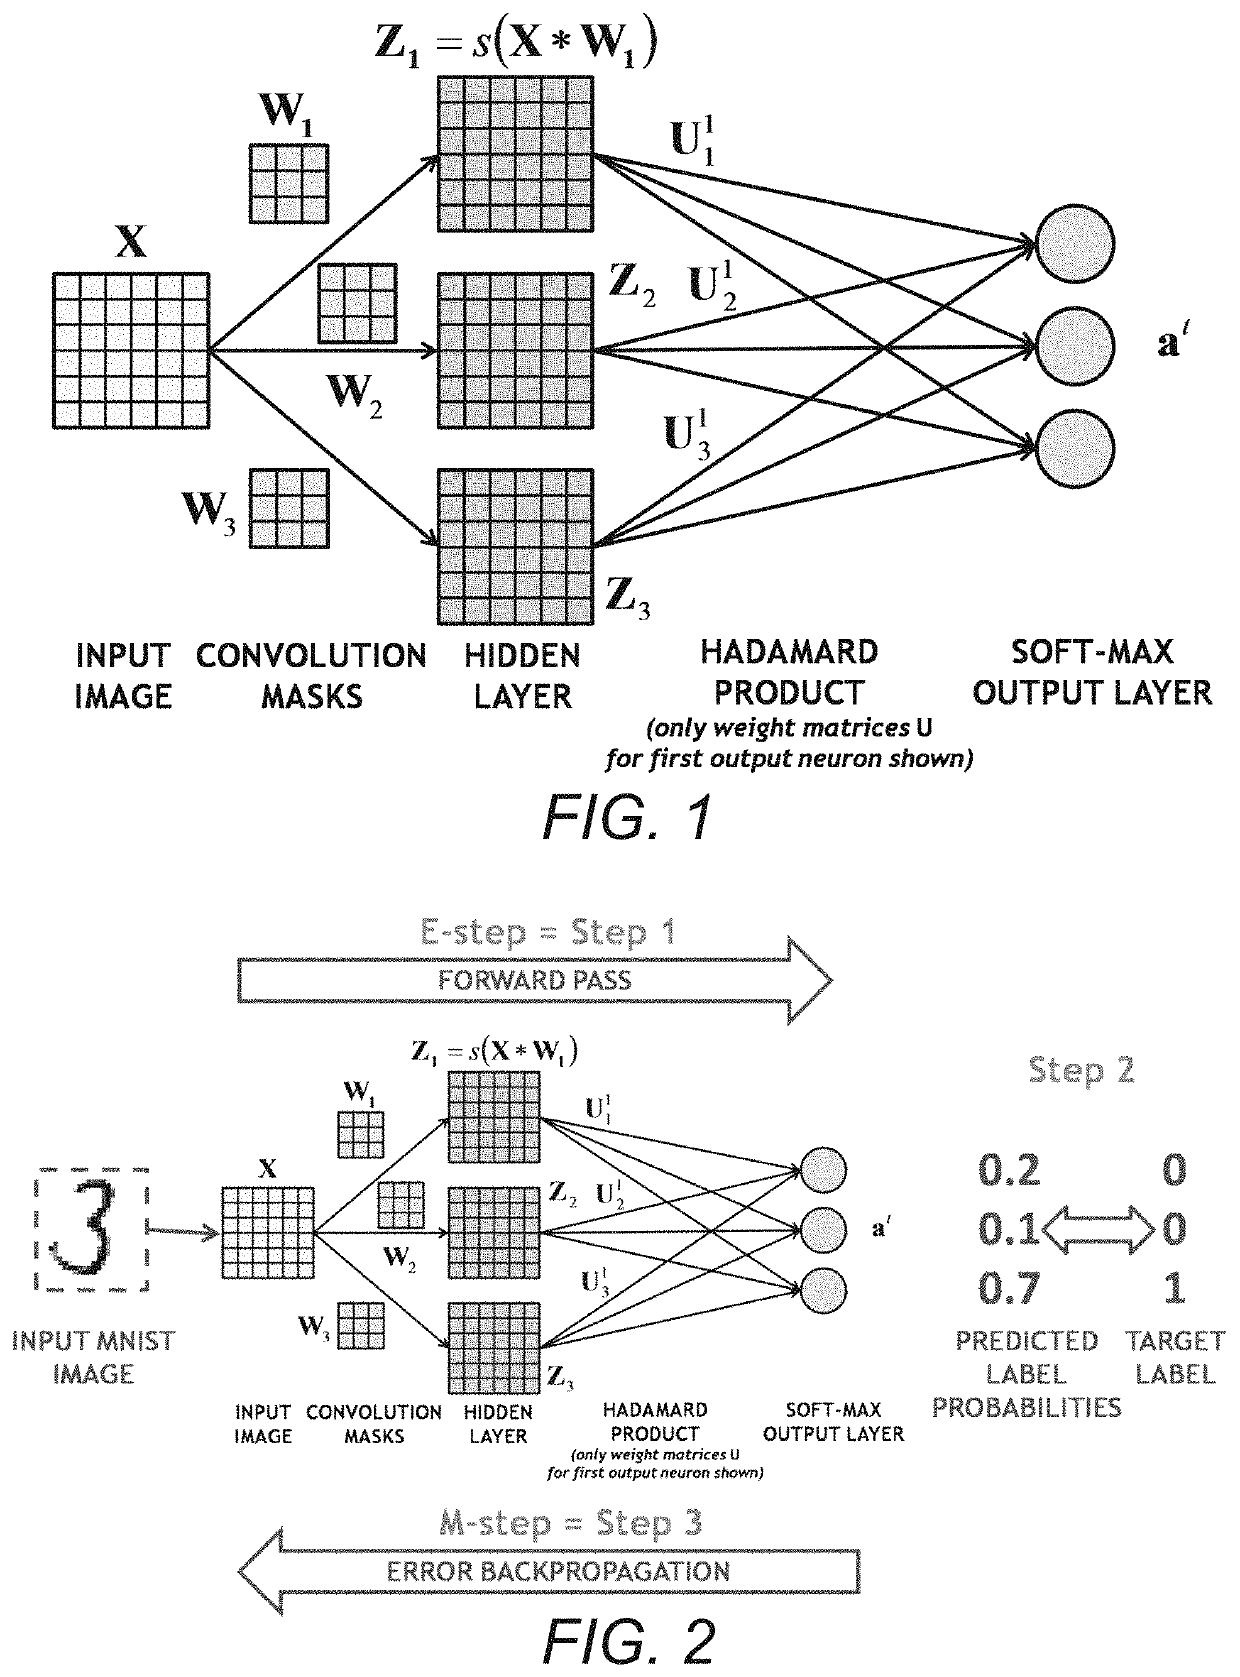 Noise-enhanced convolutional neural networks